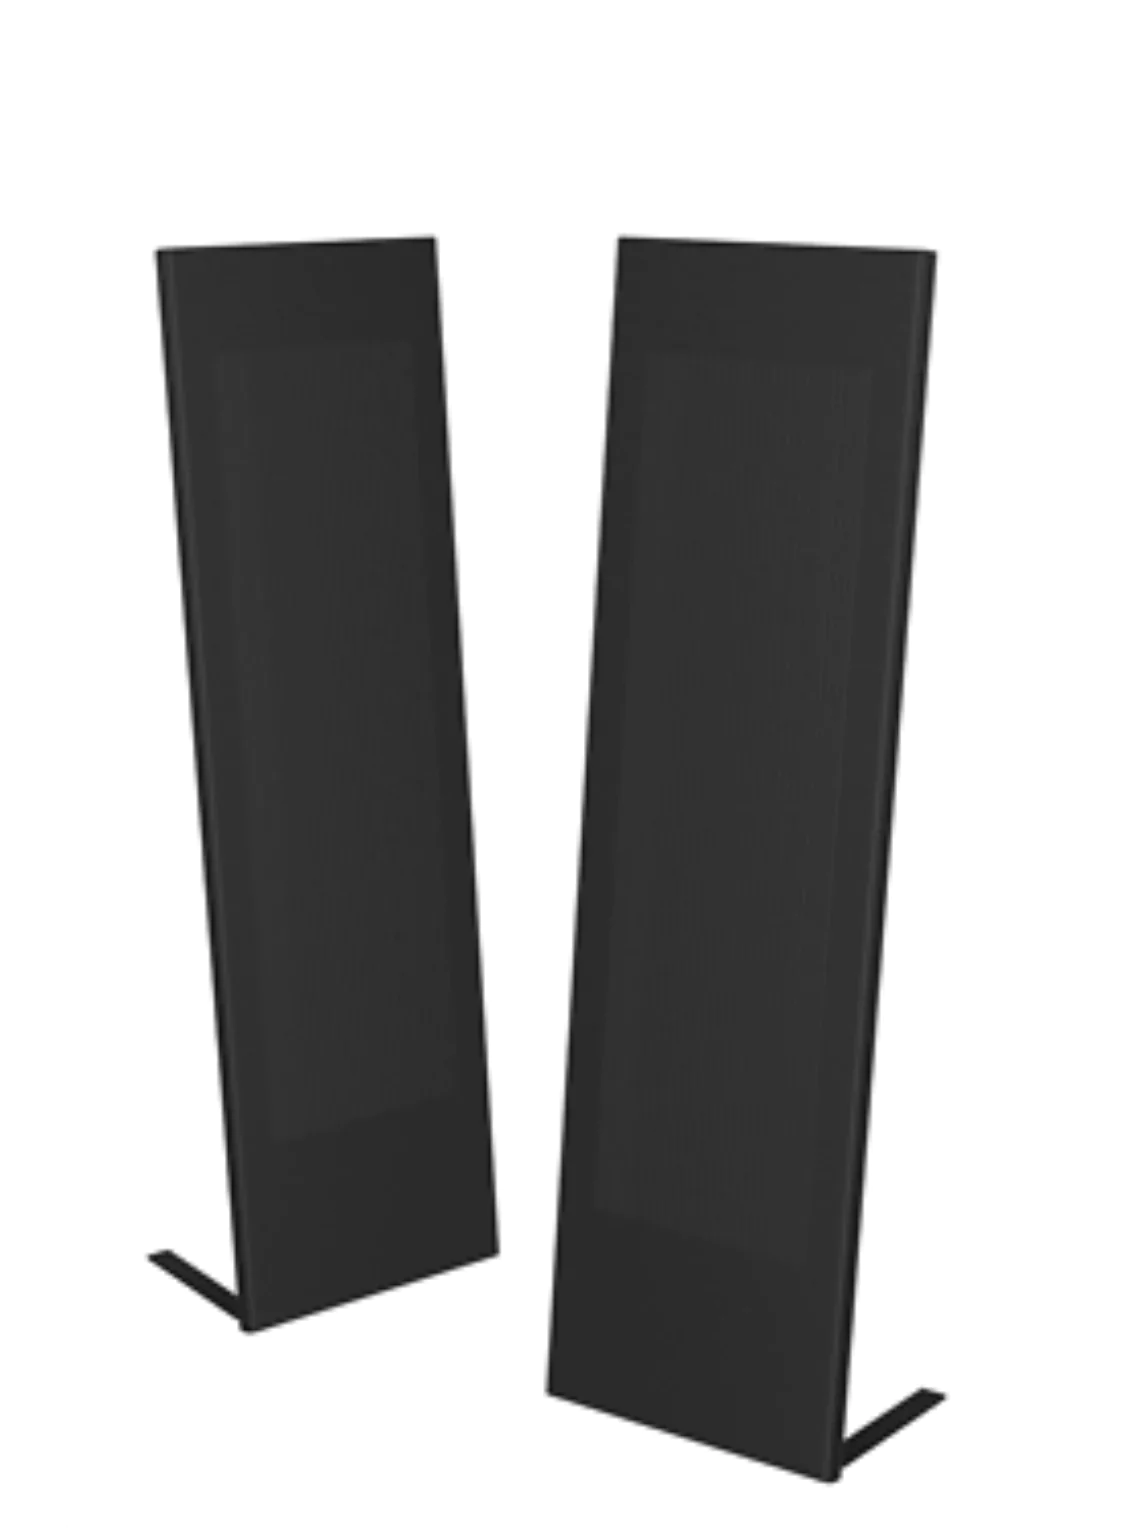 Magnepan LRS speakers